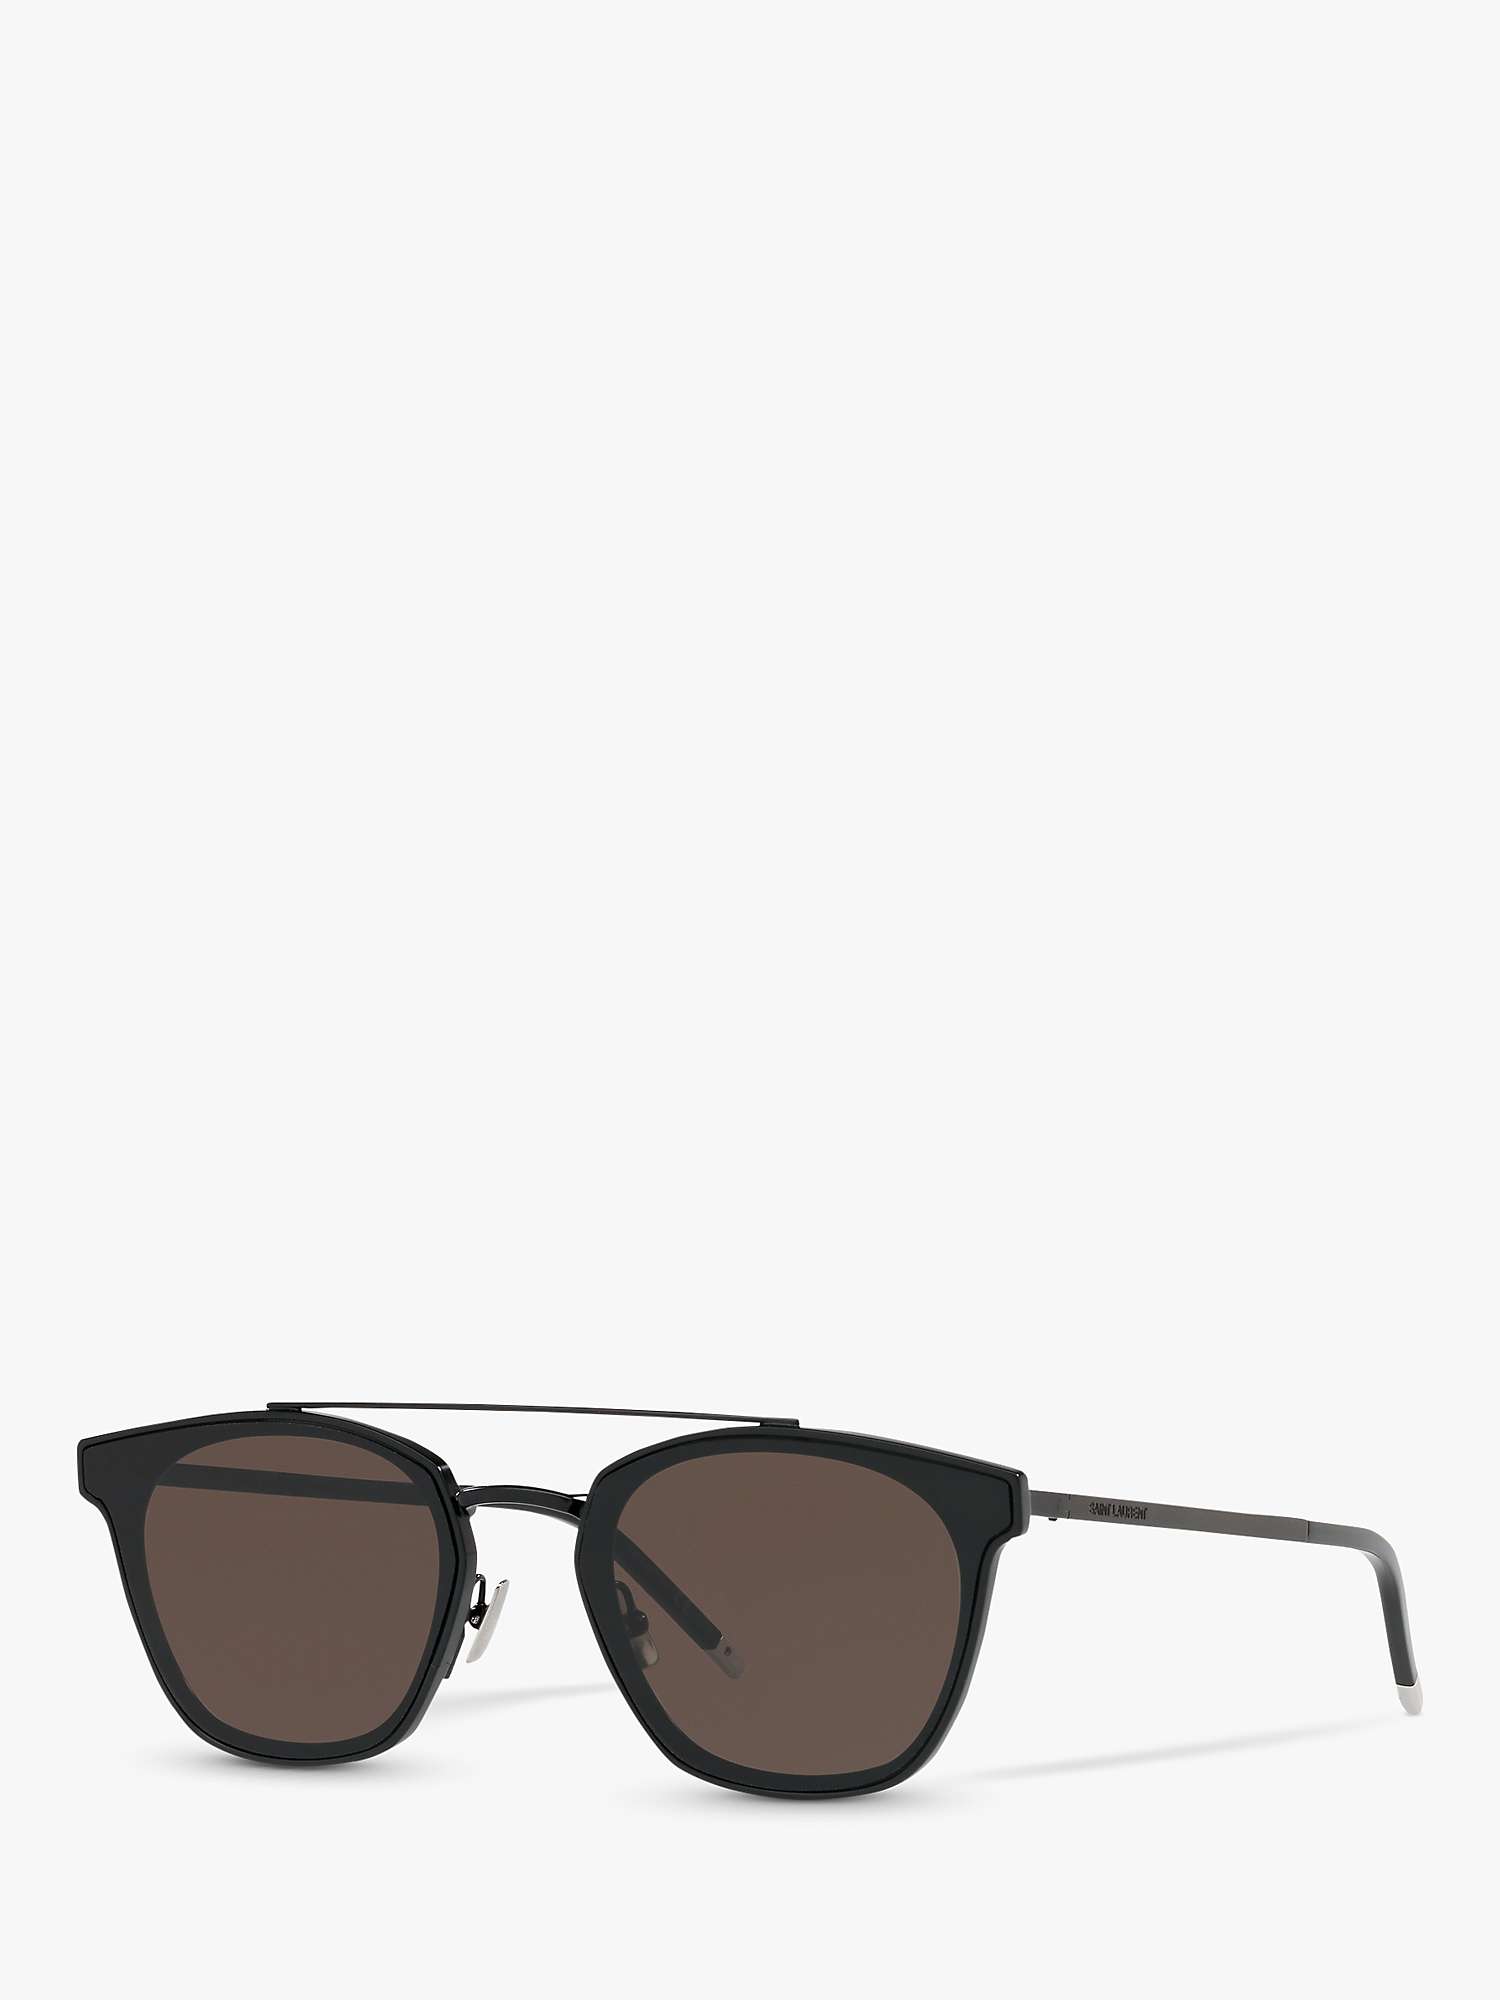 Buy Yves Saint Laurent SL 28 Unisex Metal Rectangular Sunglasses, Matte Black/Grey Online at johnlewis.com